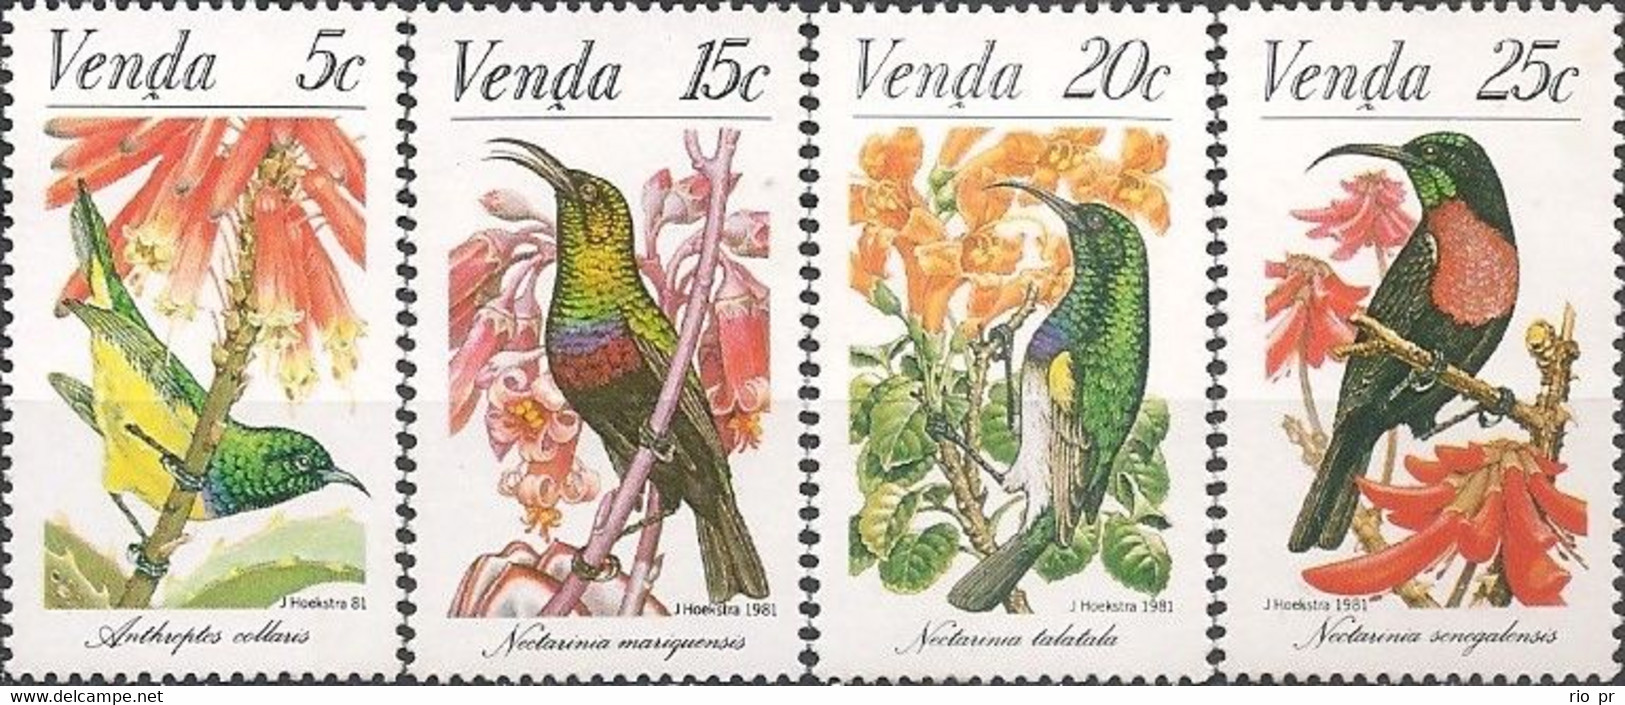 VENDA - COMPLETE SET HUMMINGBIRDS 1981 - MNH - Hummingbirds